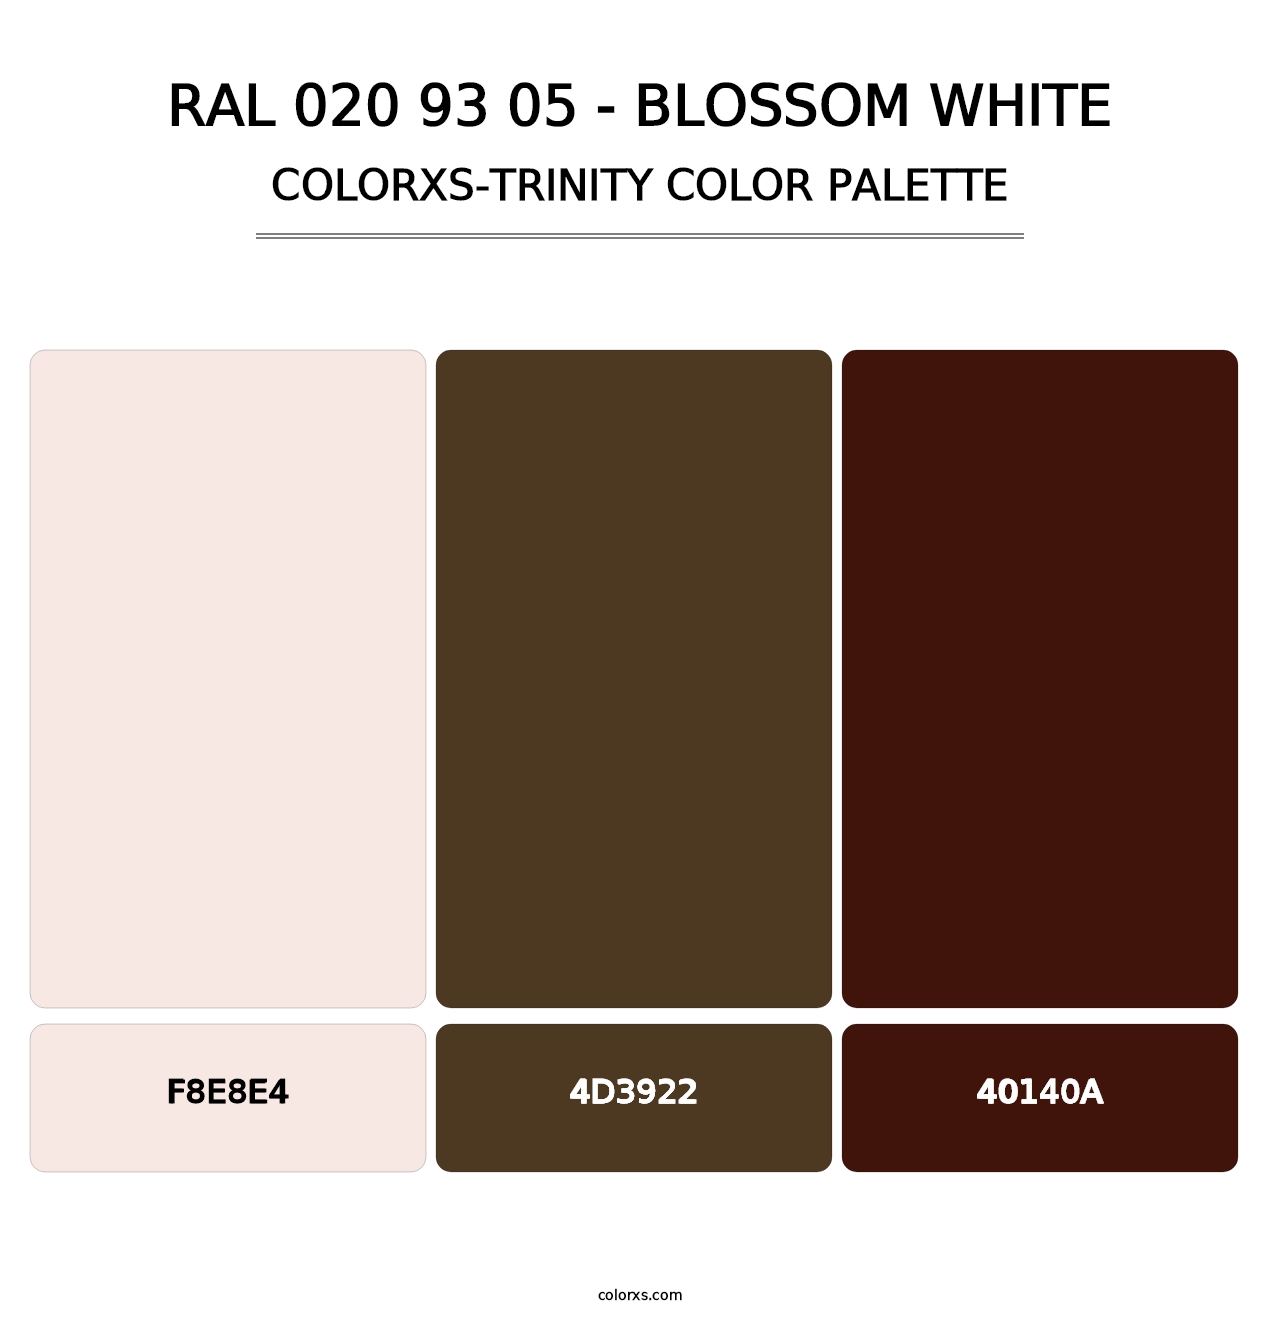 RAL 020 93 05 - Blossom White - Colorxs Trinity Palette